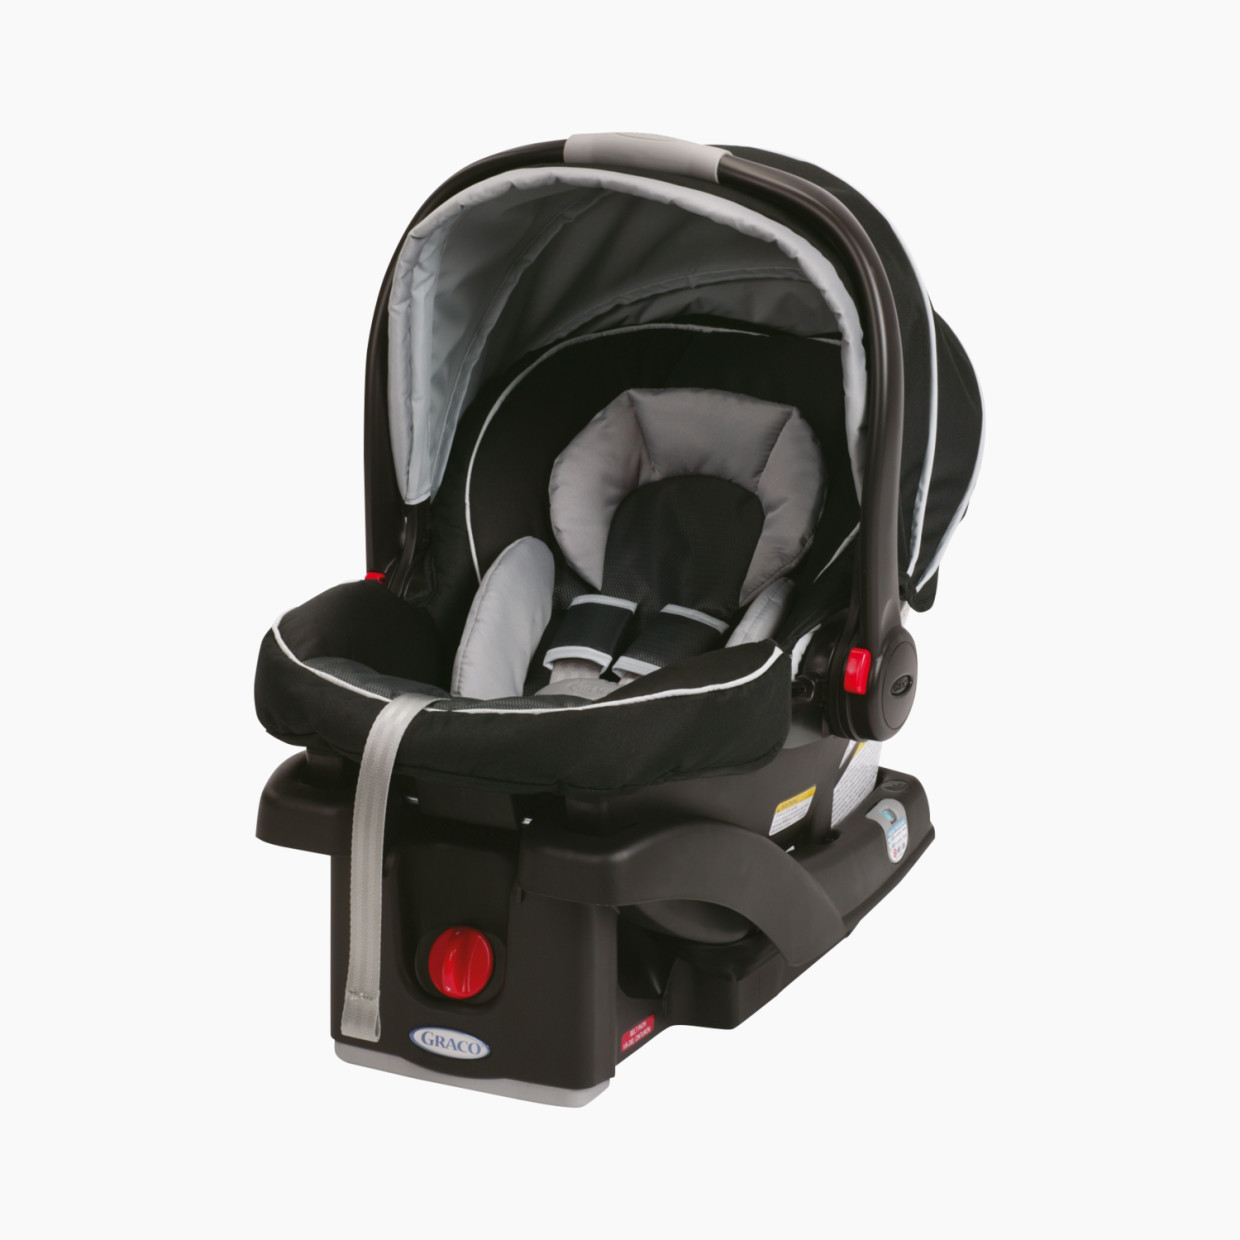 Graco SnugRide Click Connect 35 Infant Car Seat - Gotham.